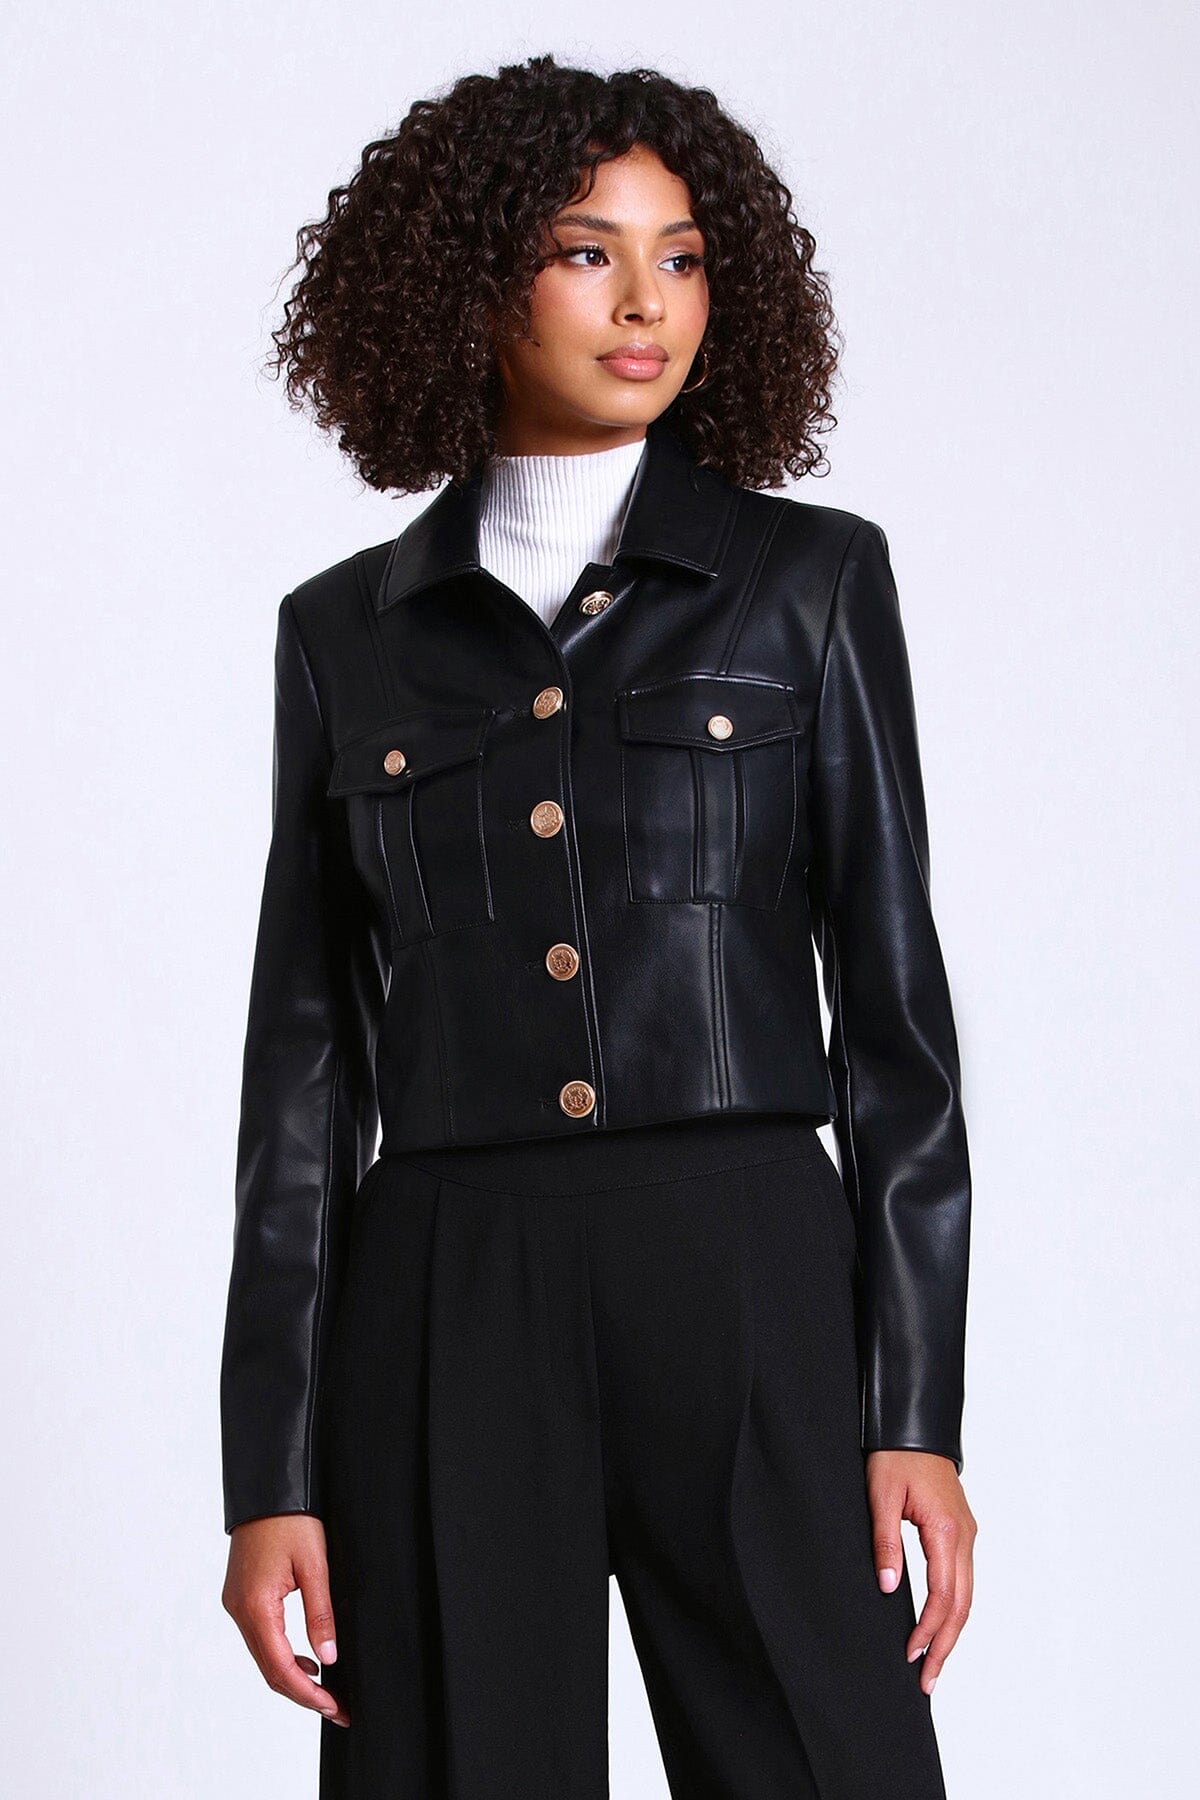 Black vegan leather military style crop jacket coat women's figure flattering date night jackets coats